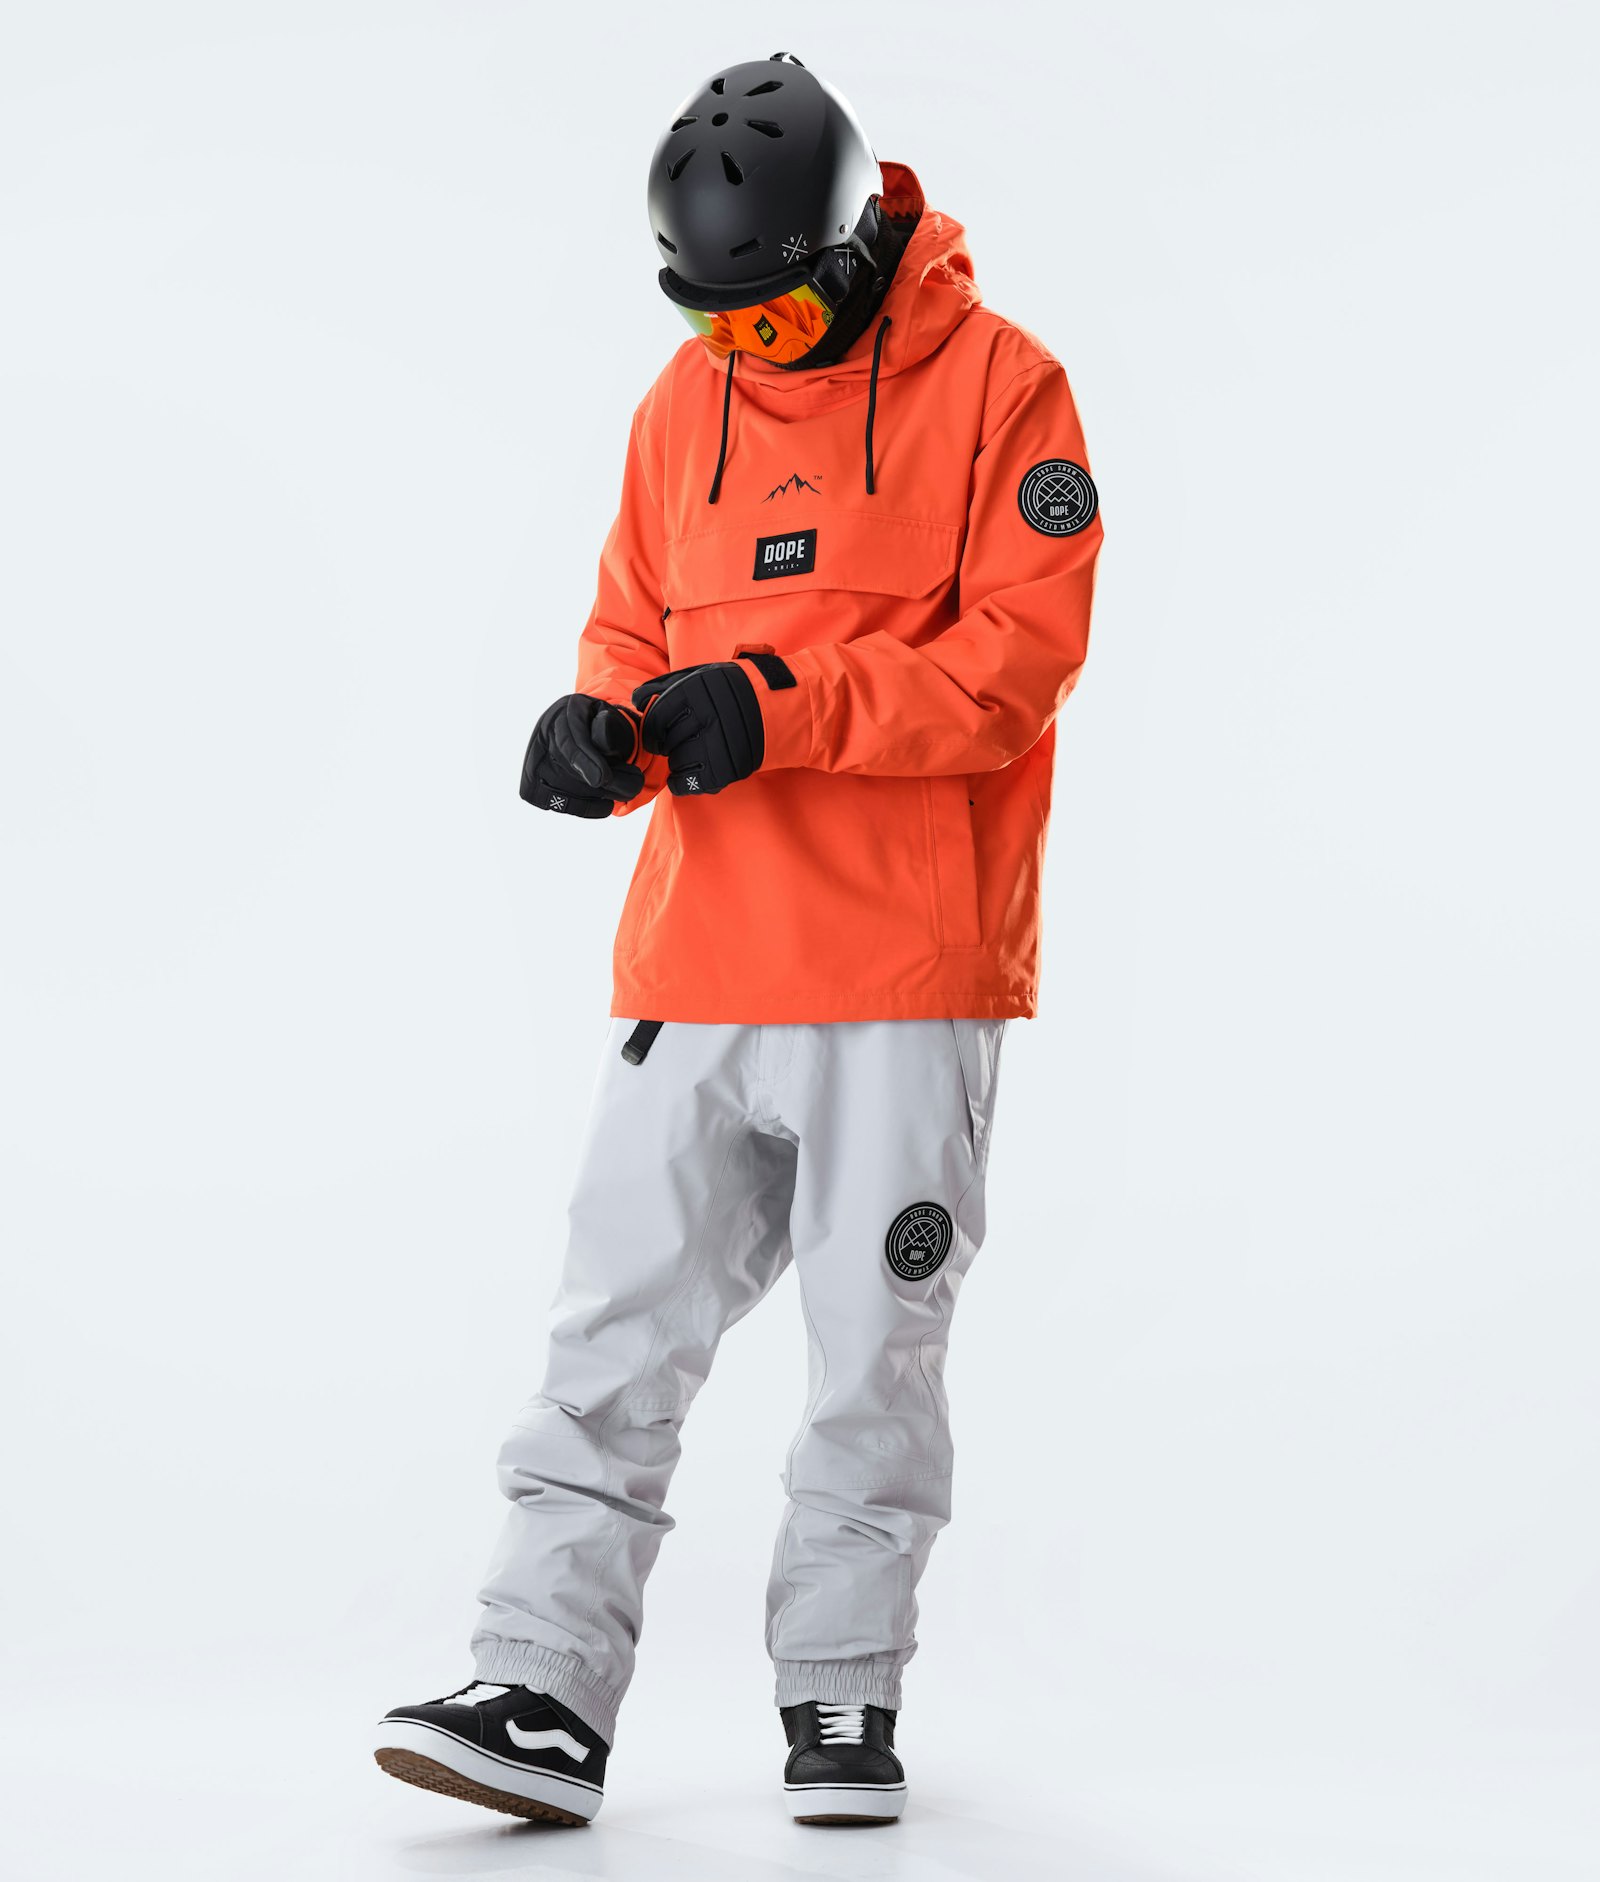 Dope Blizzard 2020 Snowboardjakke Herre Orange